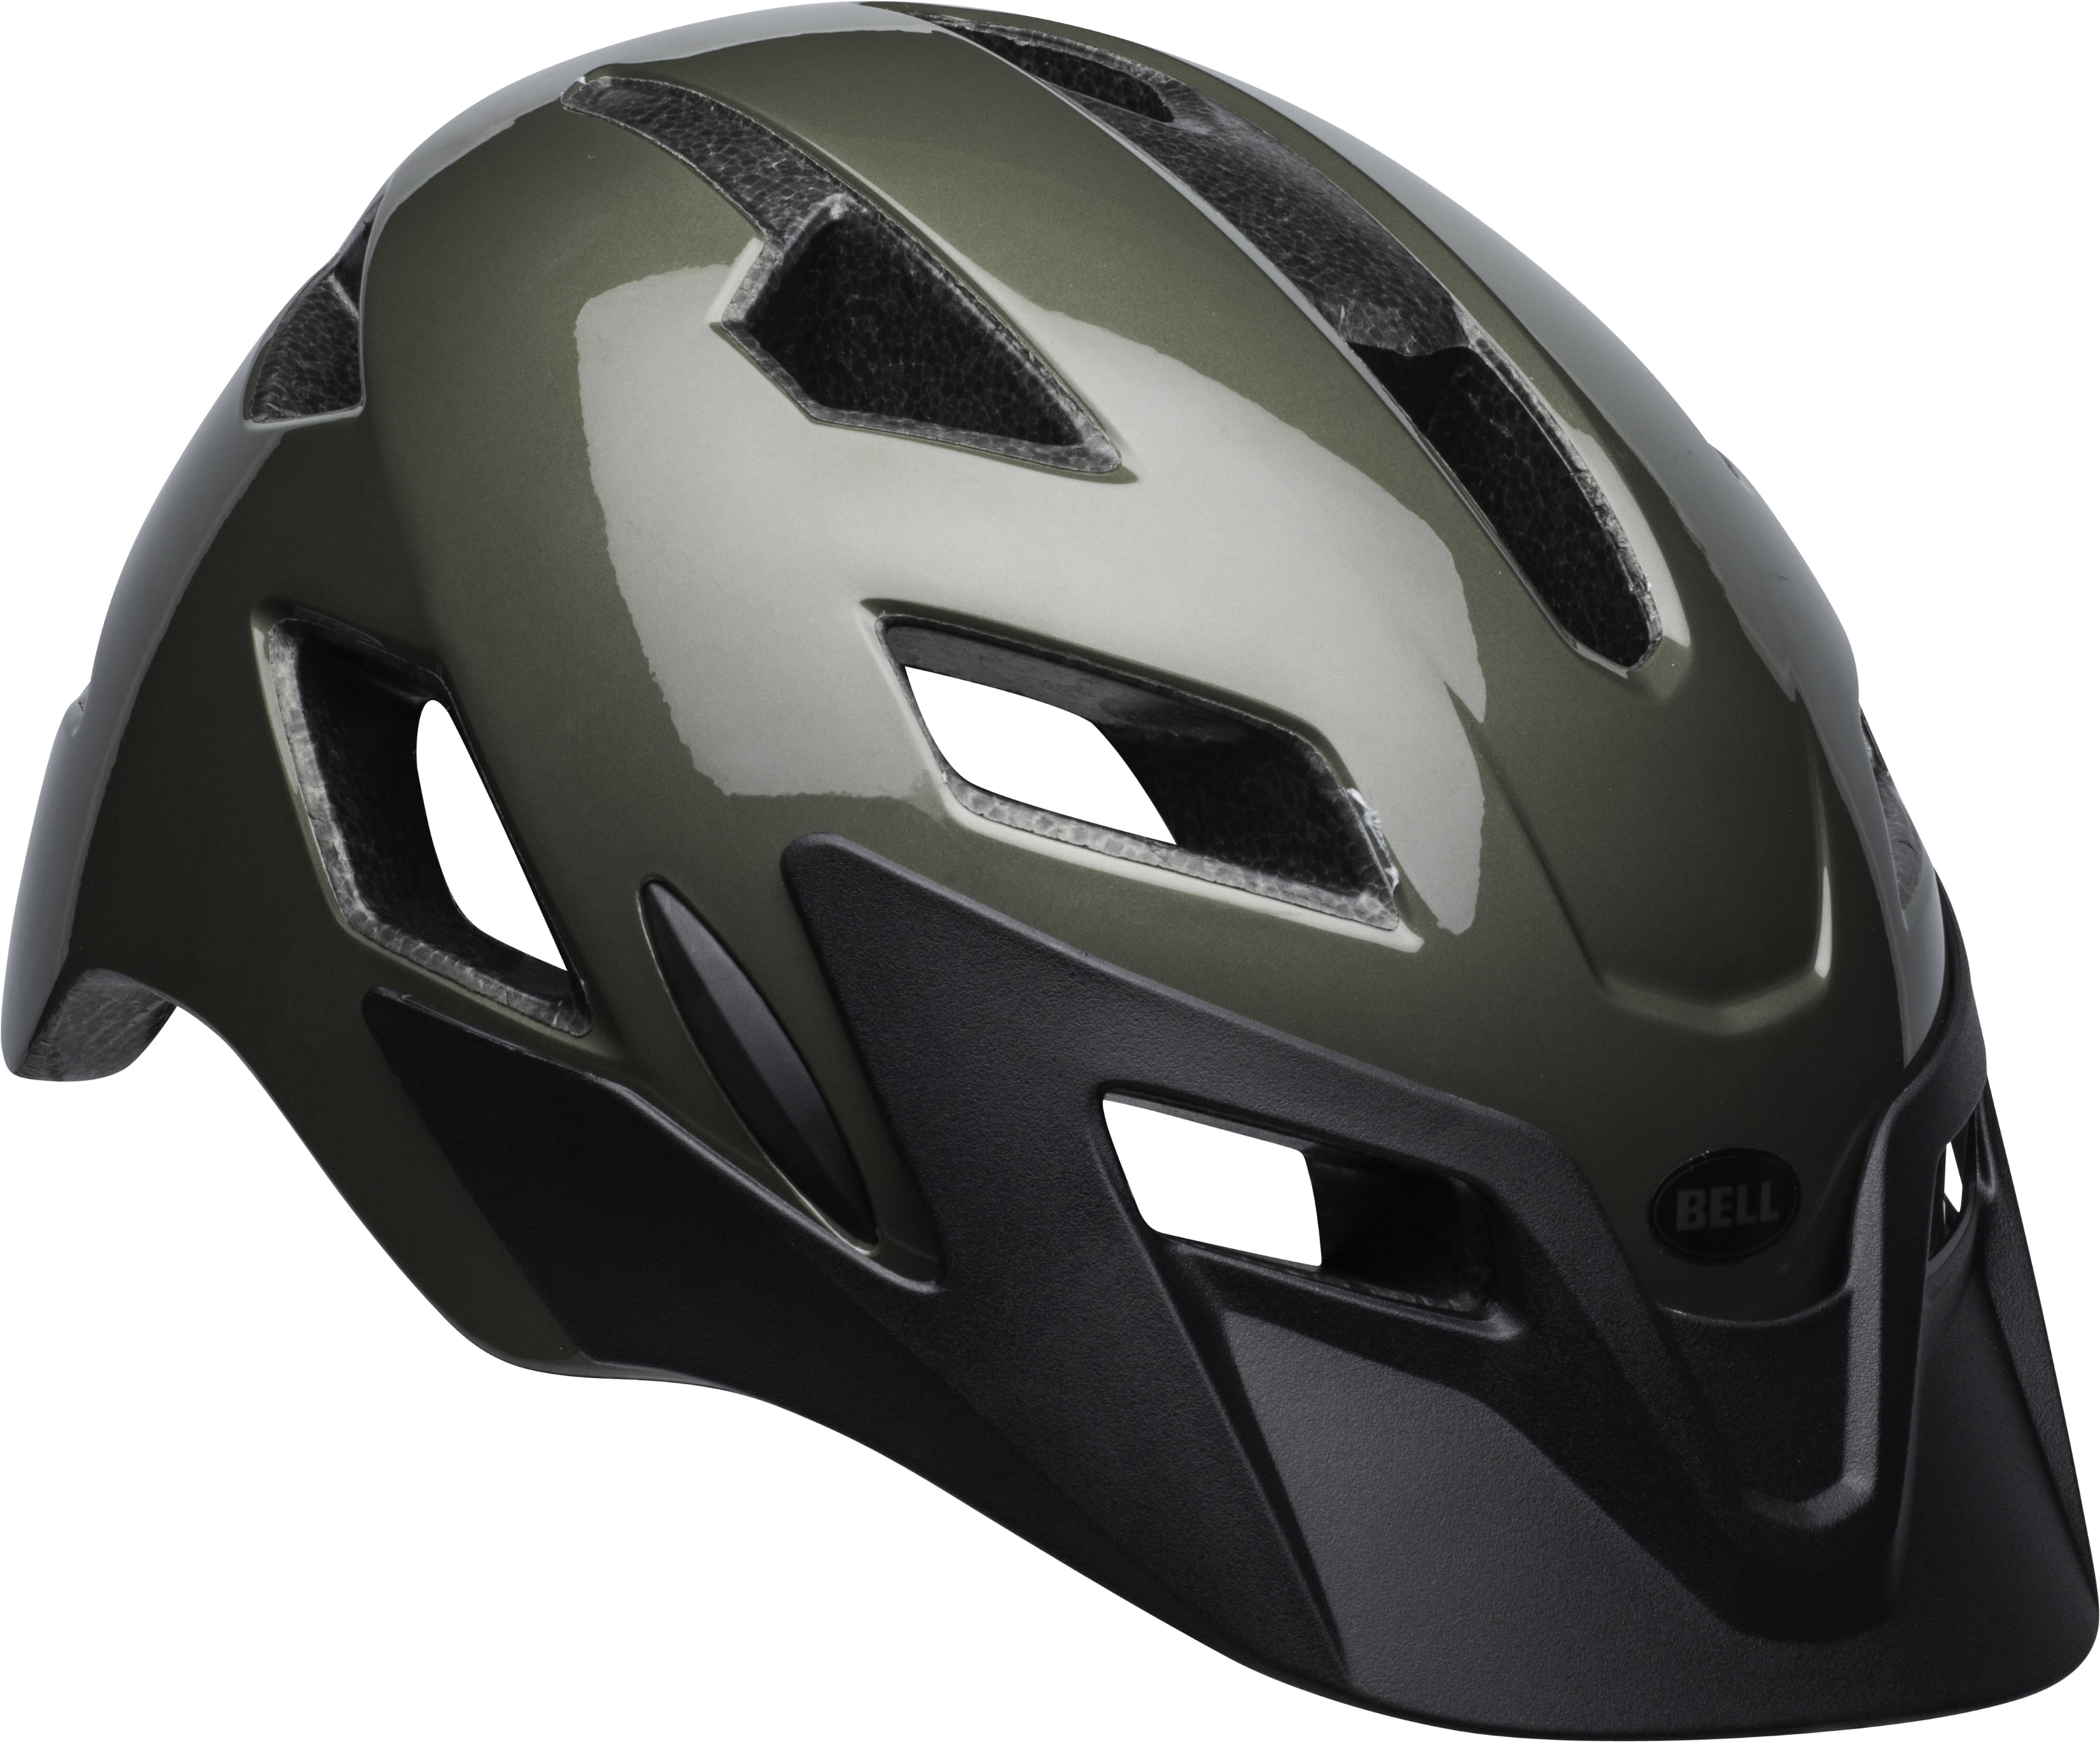 Bell Sports Terrain Adult Bicycle Helmet - Moss